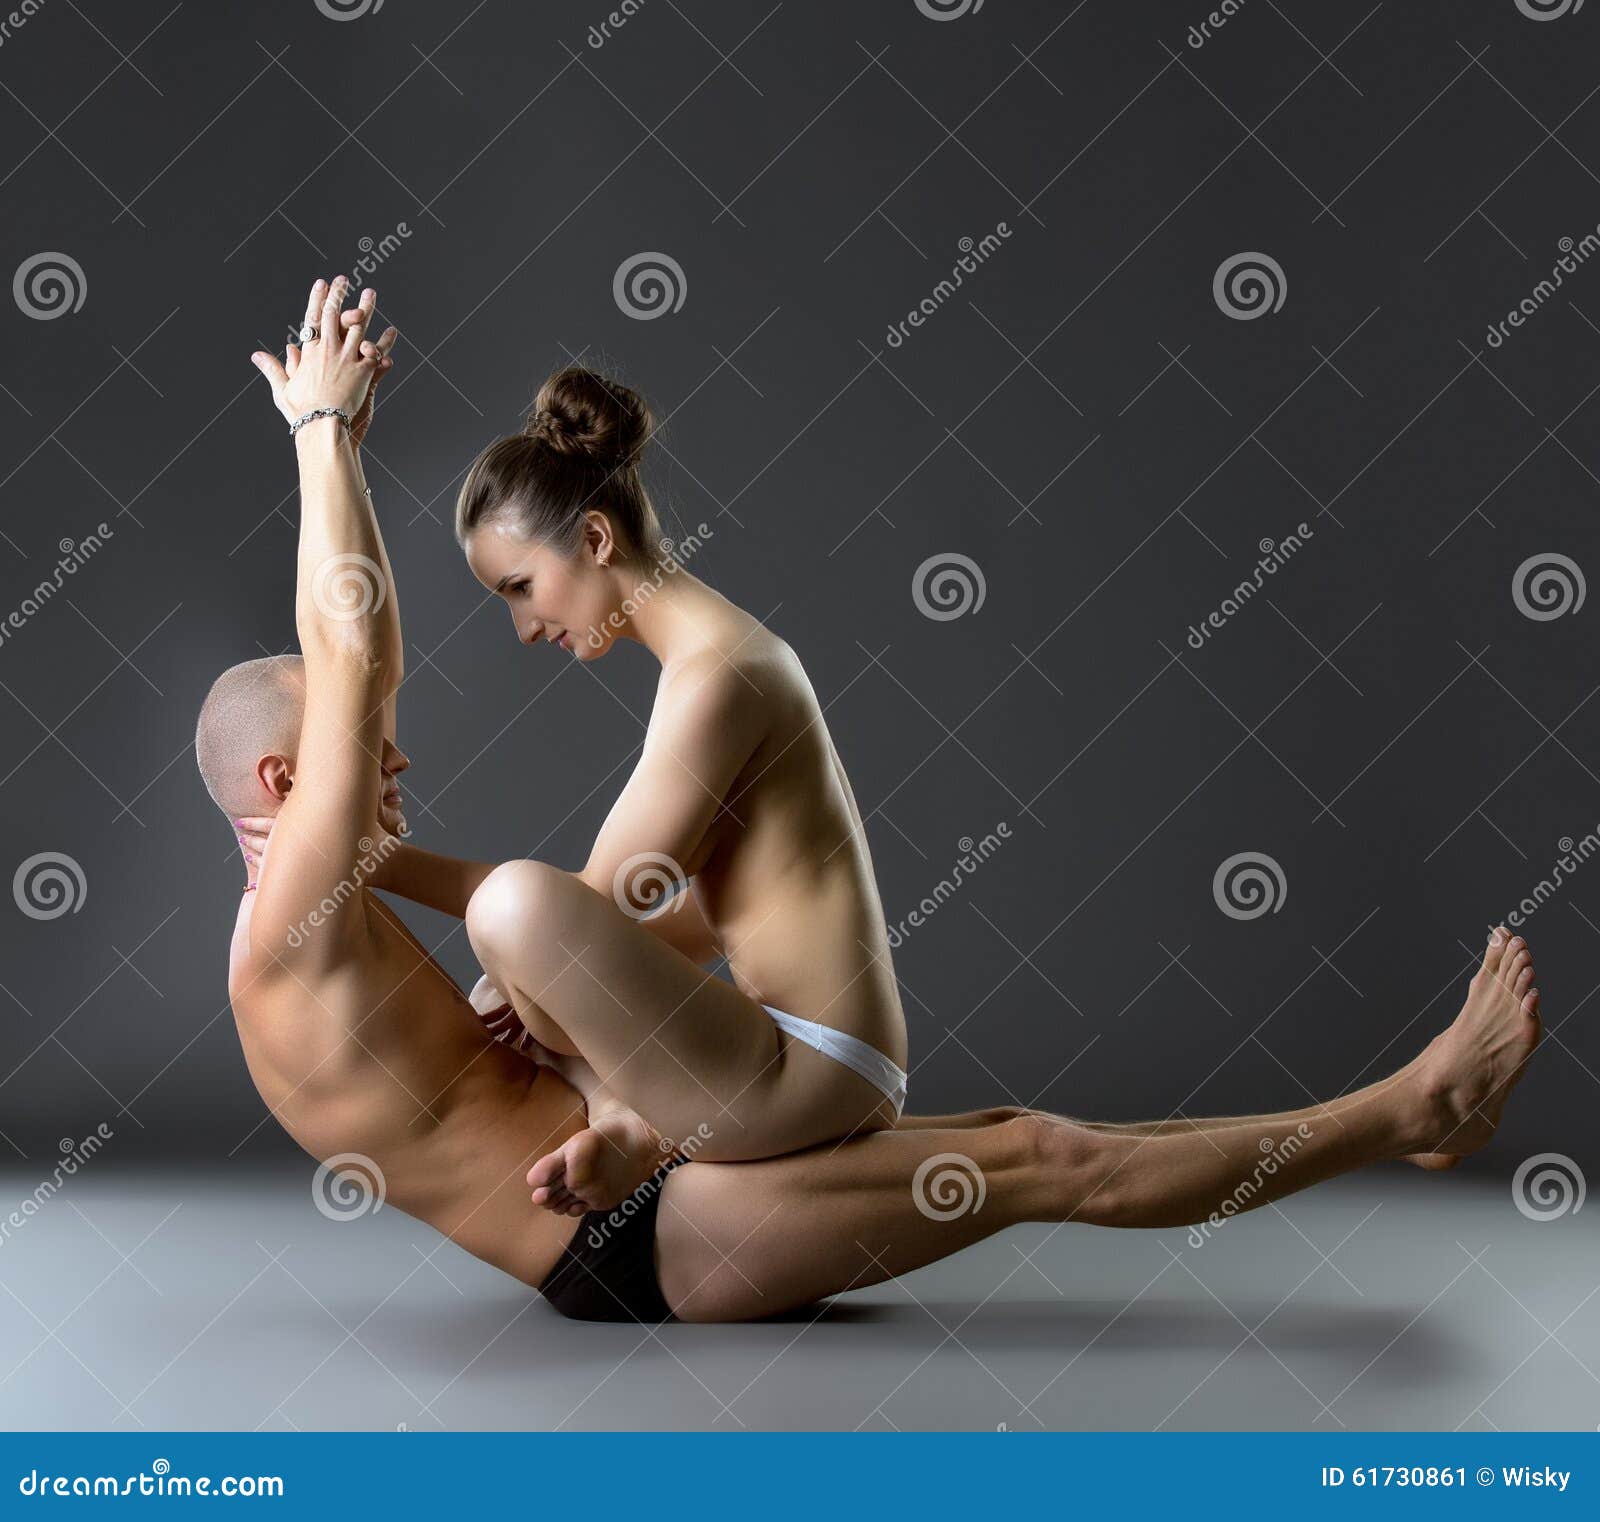 Naked yoga reddit